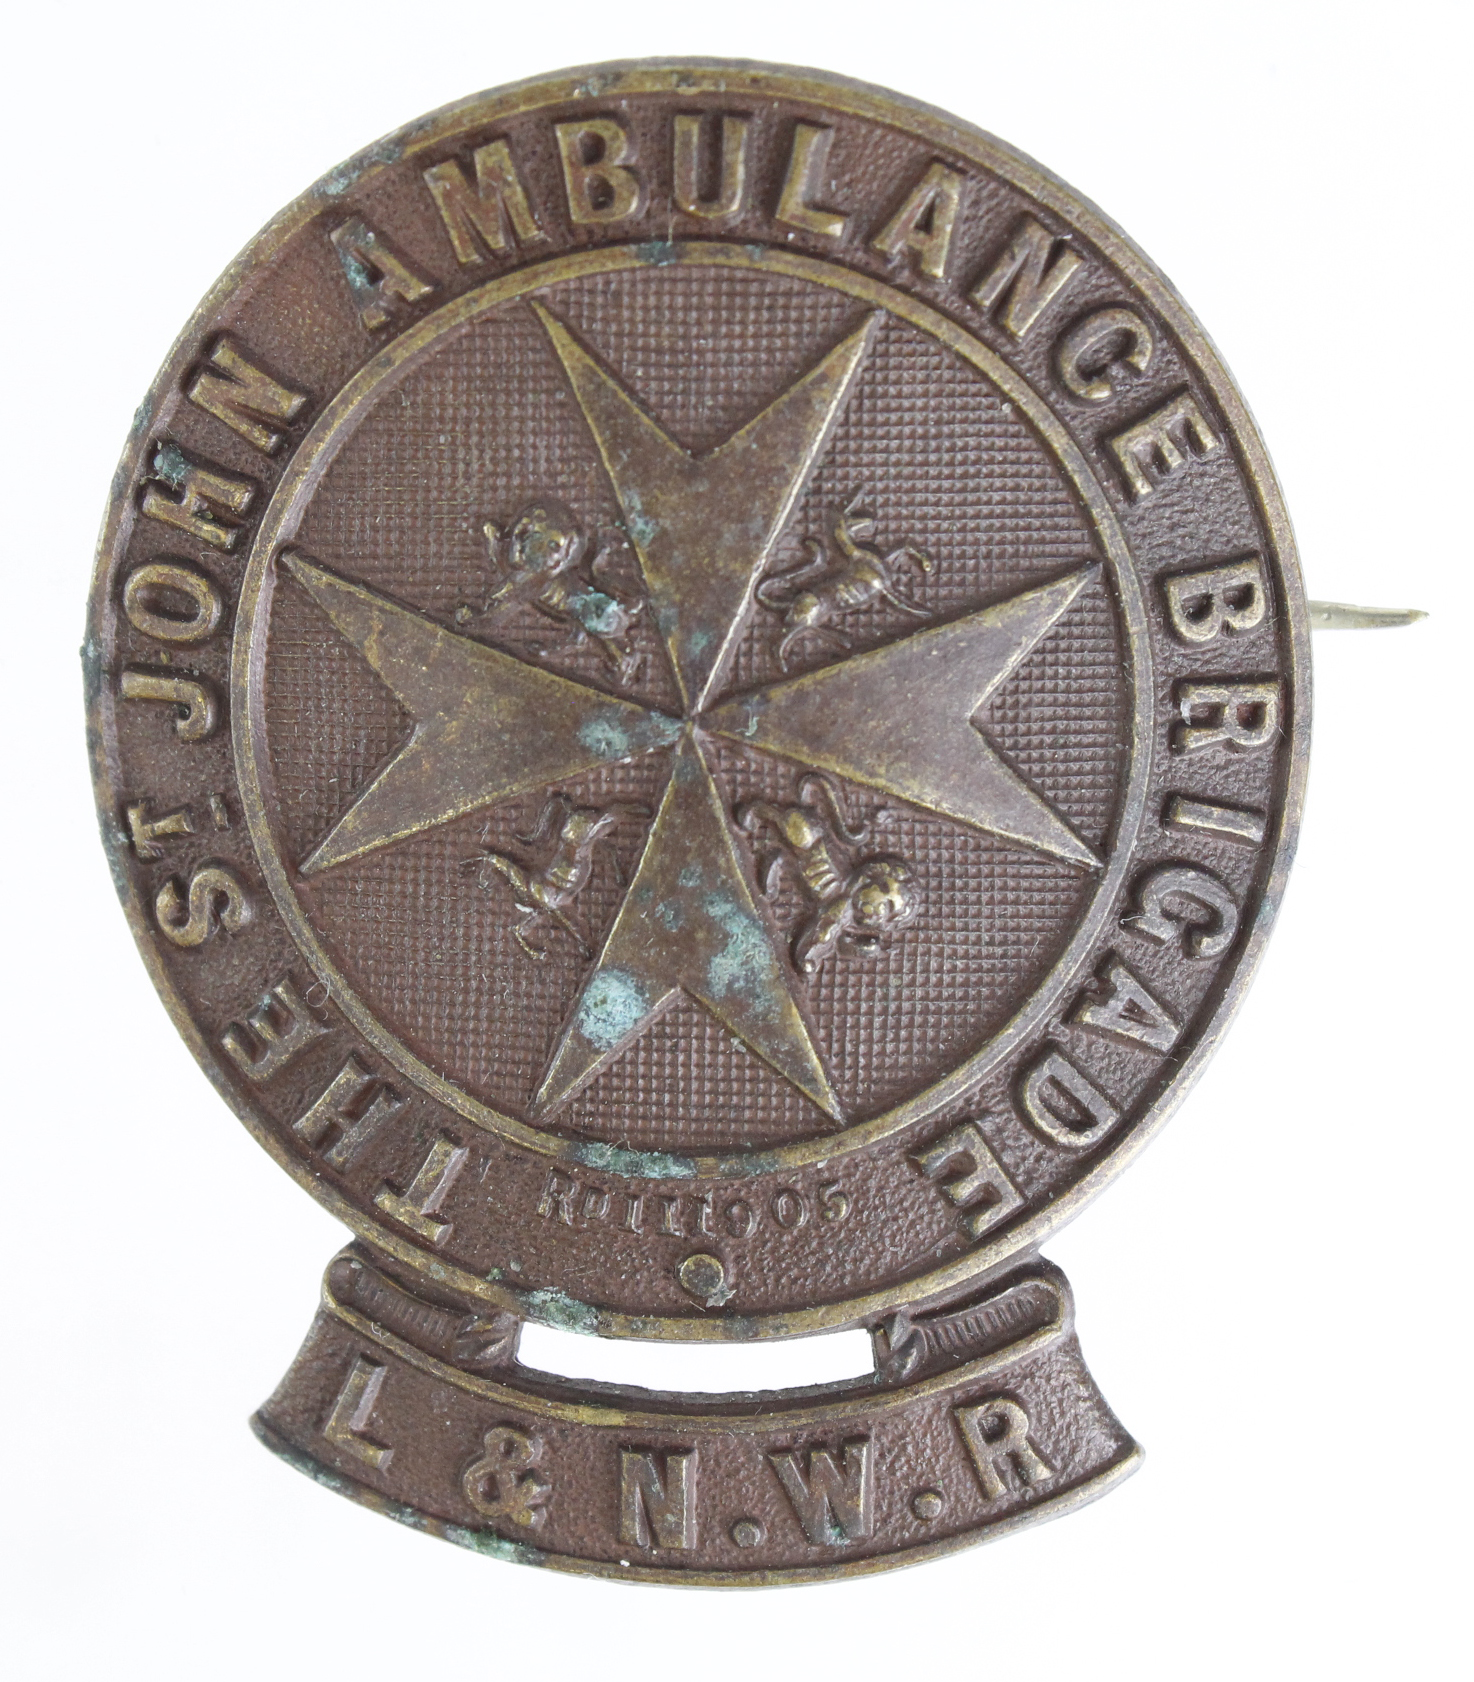 London & North Western Railway St. John Ambulance Brigade bronze badge - pin fitting to the reverse